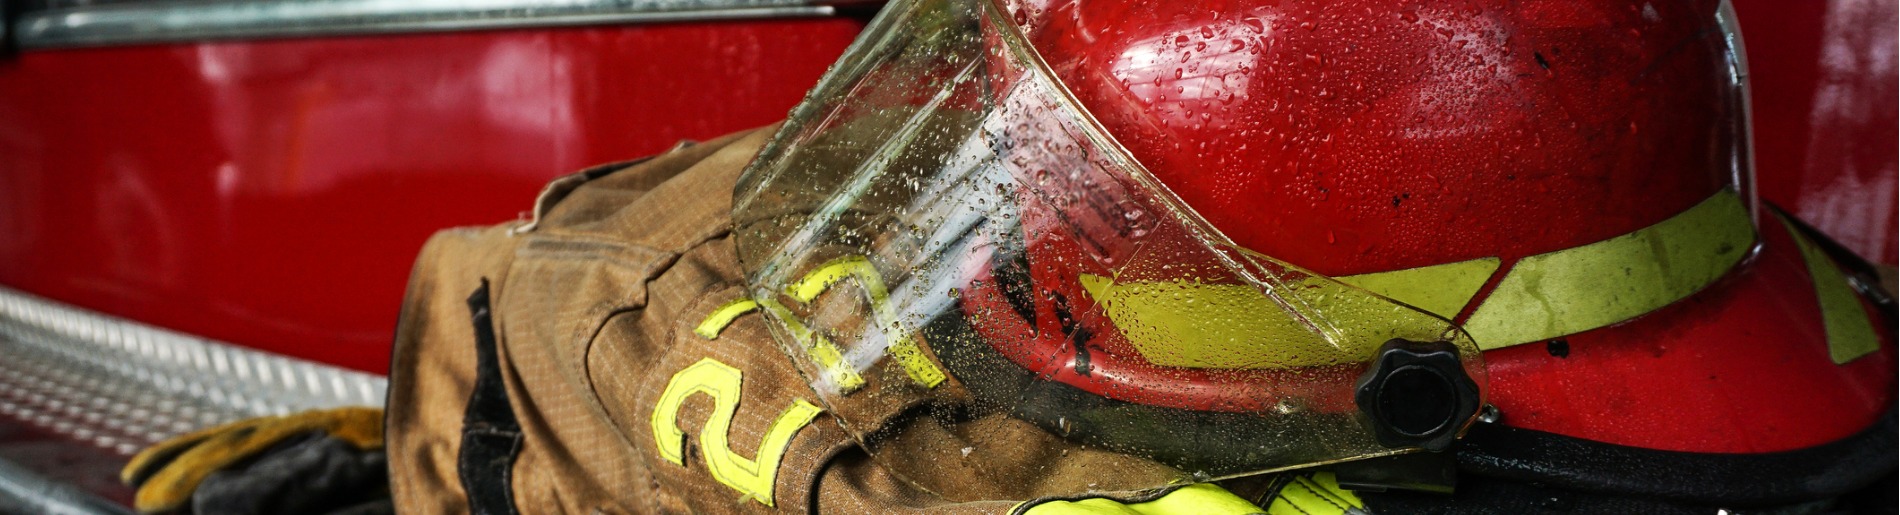 Firefighter's helmet and coat sitting on fire truck